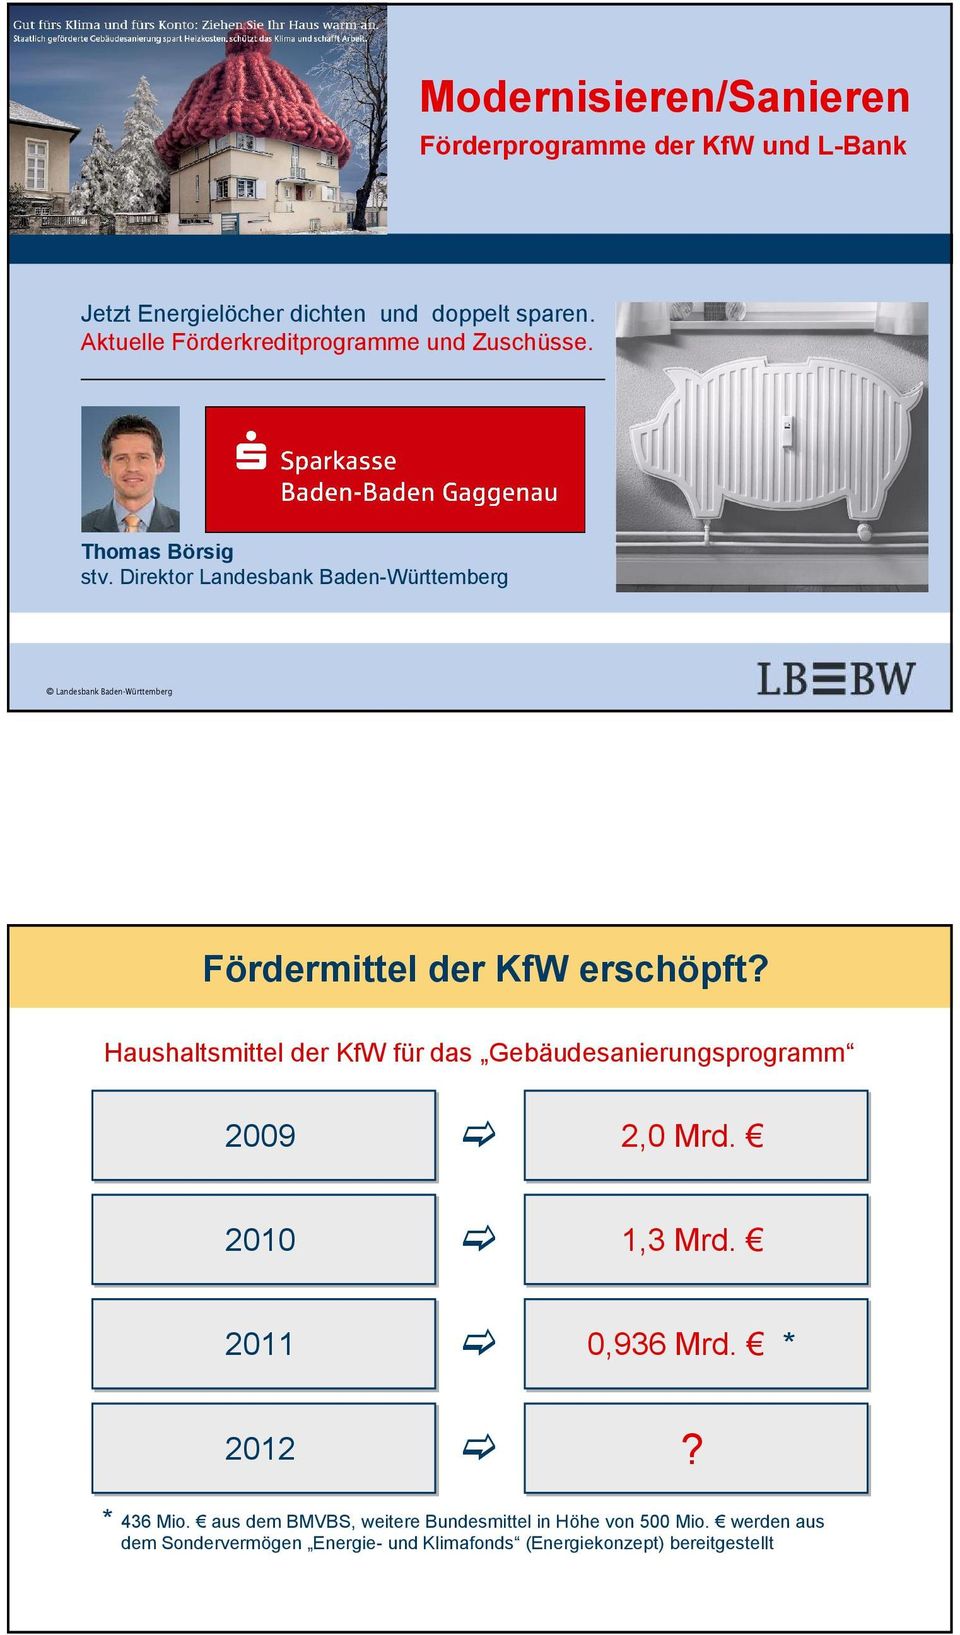 Direktor Landesbank Baden-Württemberg Fördermittel der KfW erschöpft?